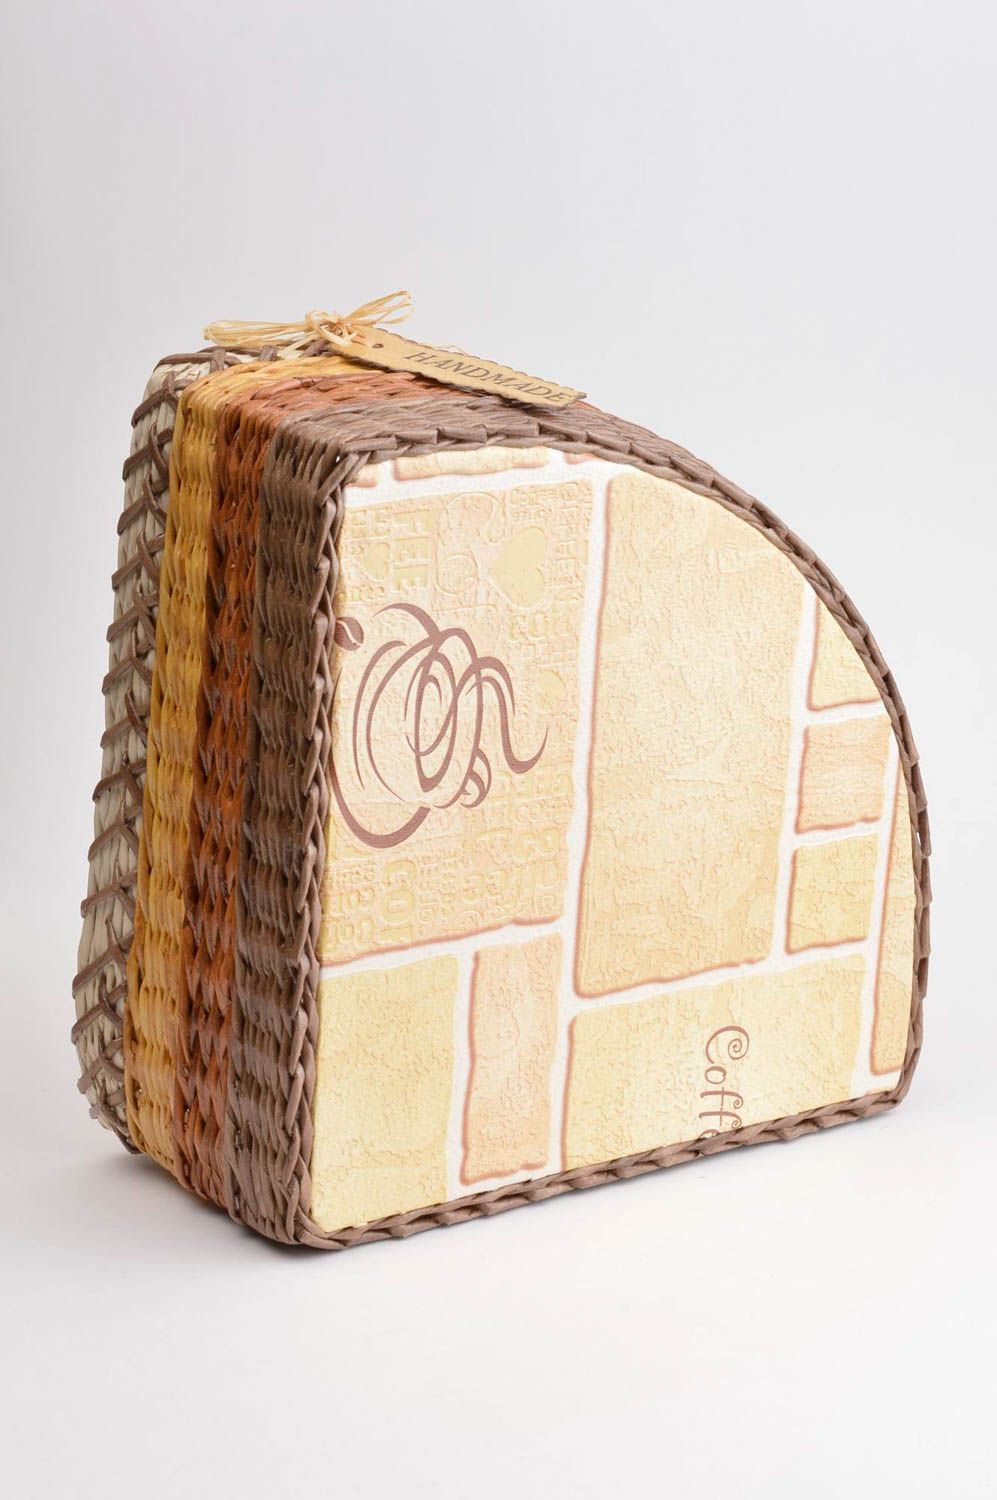 Handmade basket unusual gift interior decor paper box kitchen decor ideas photo 4